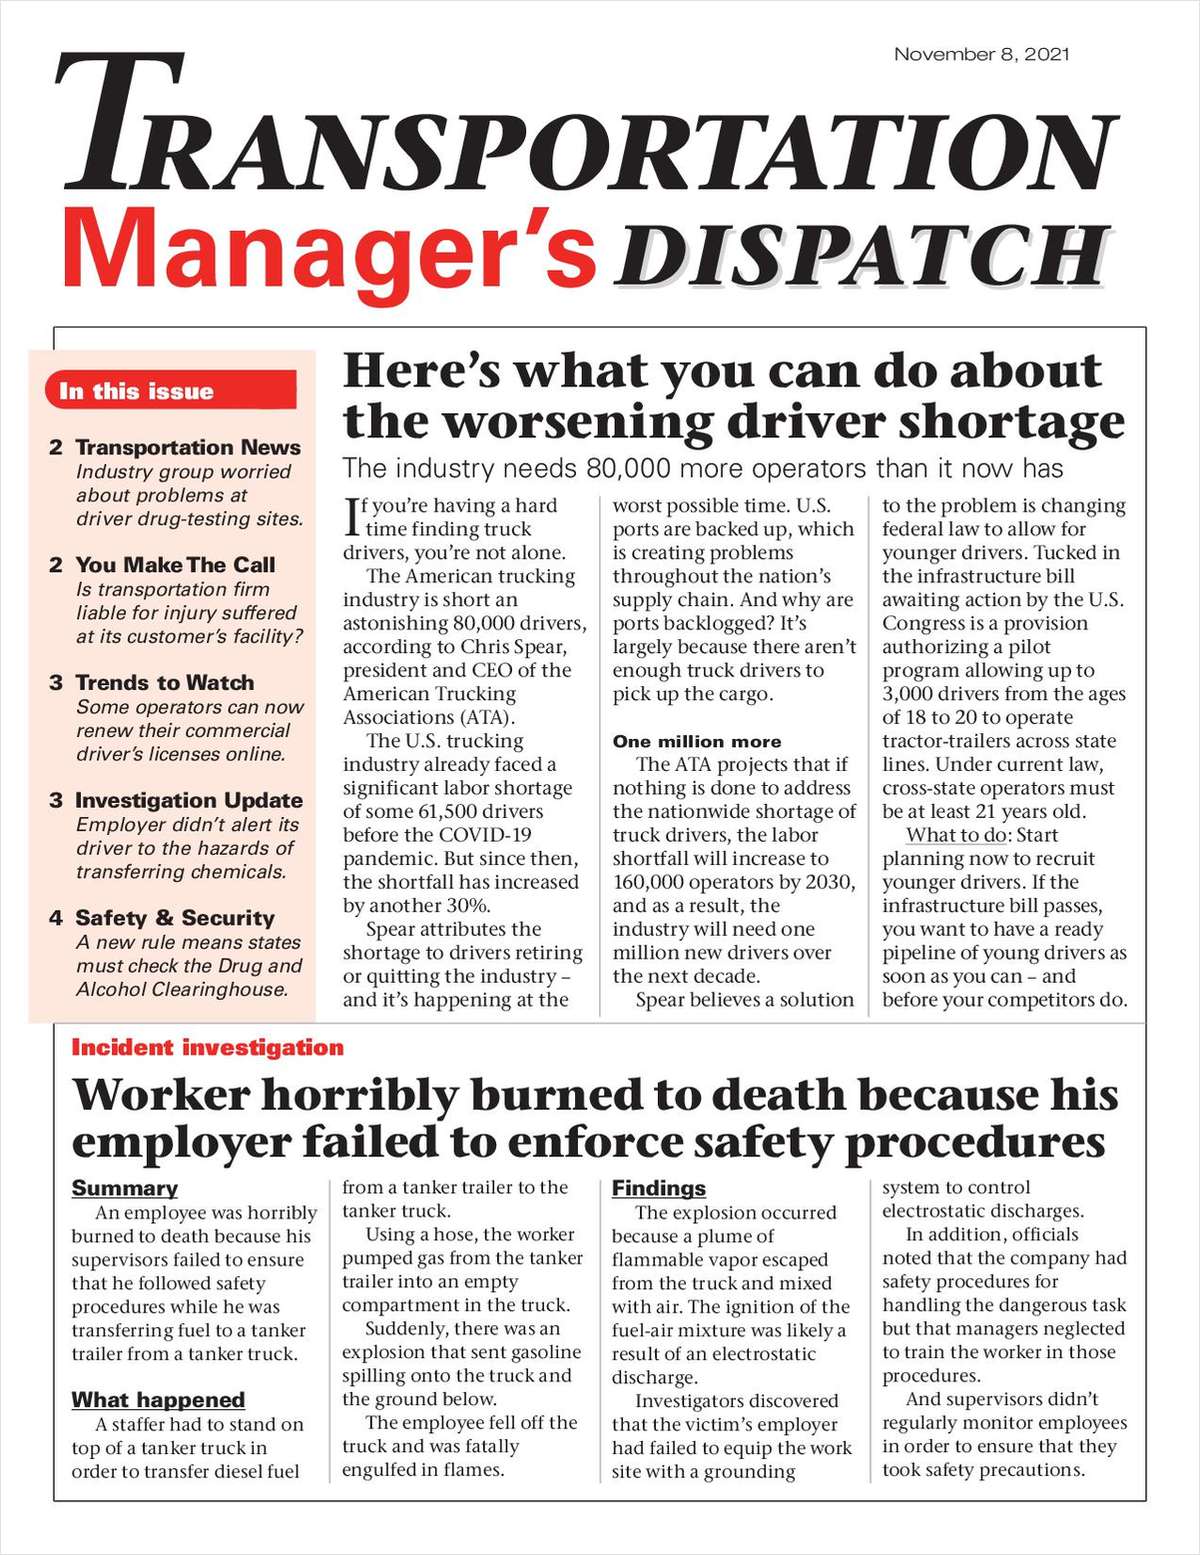 Transportation Manager's Dispatch Newsletter: November 8 Edition